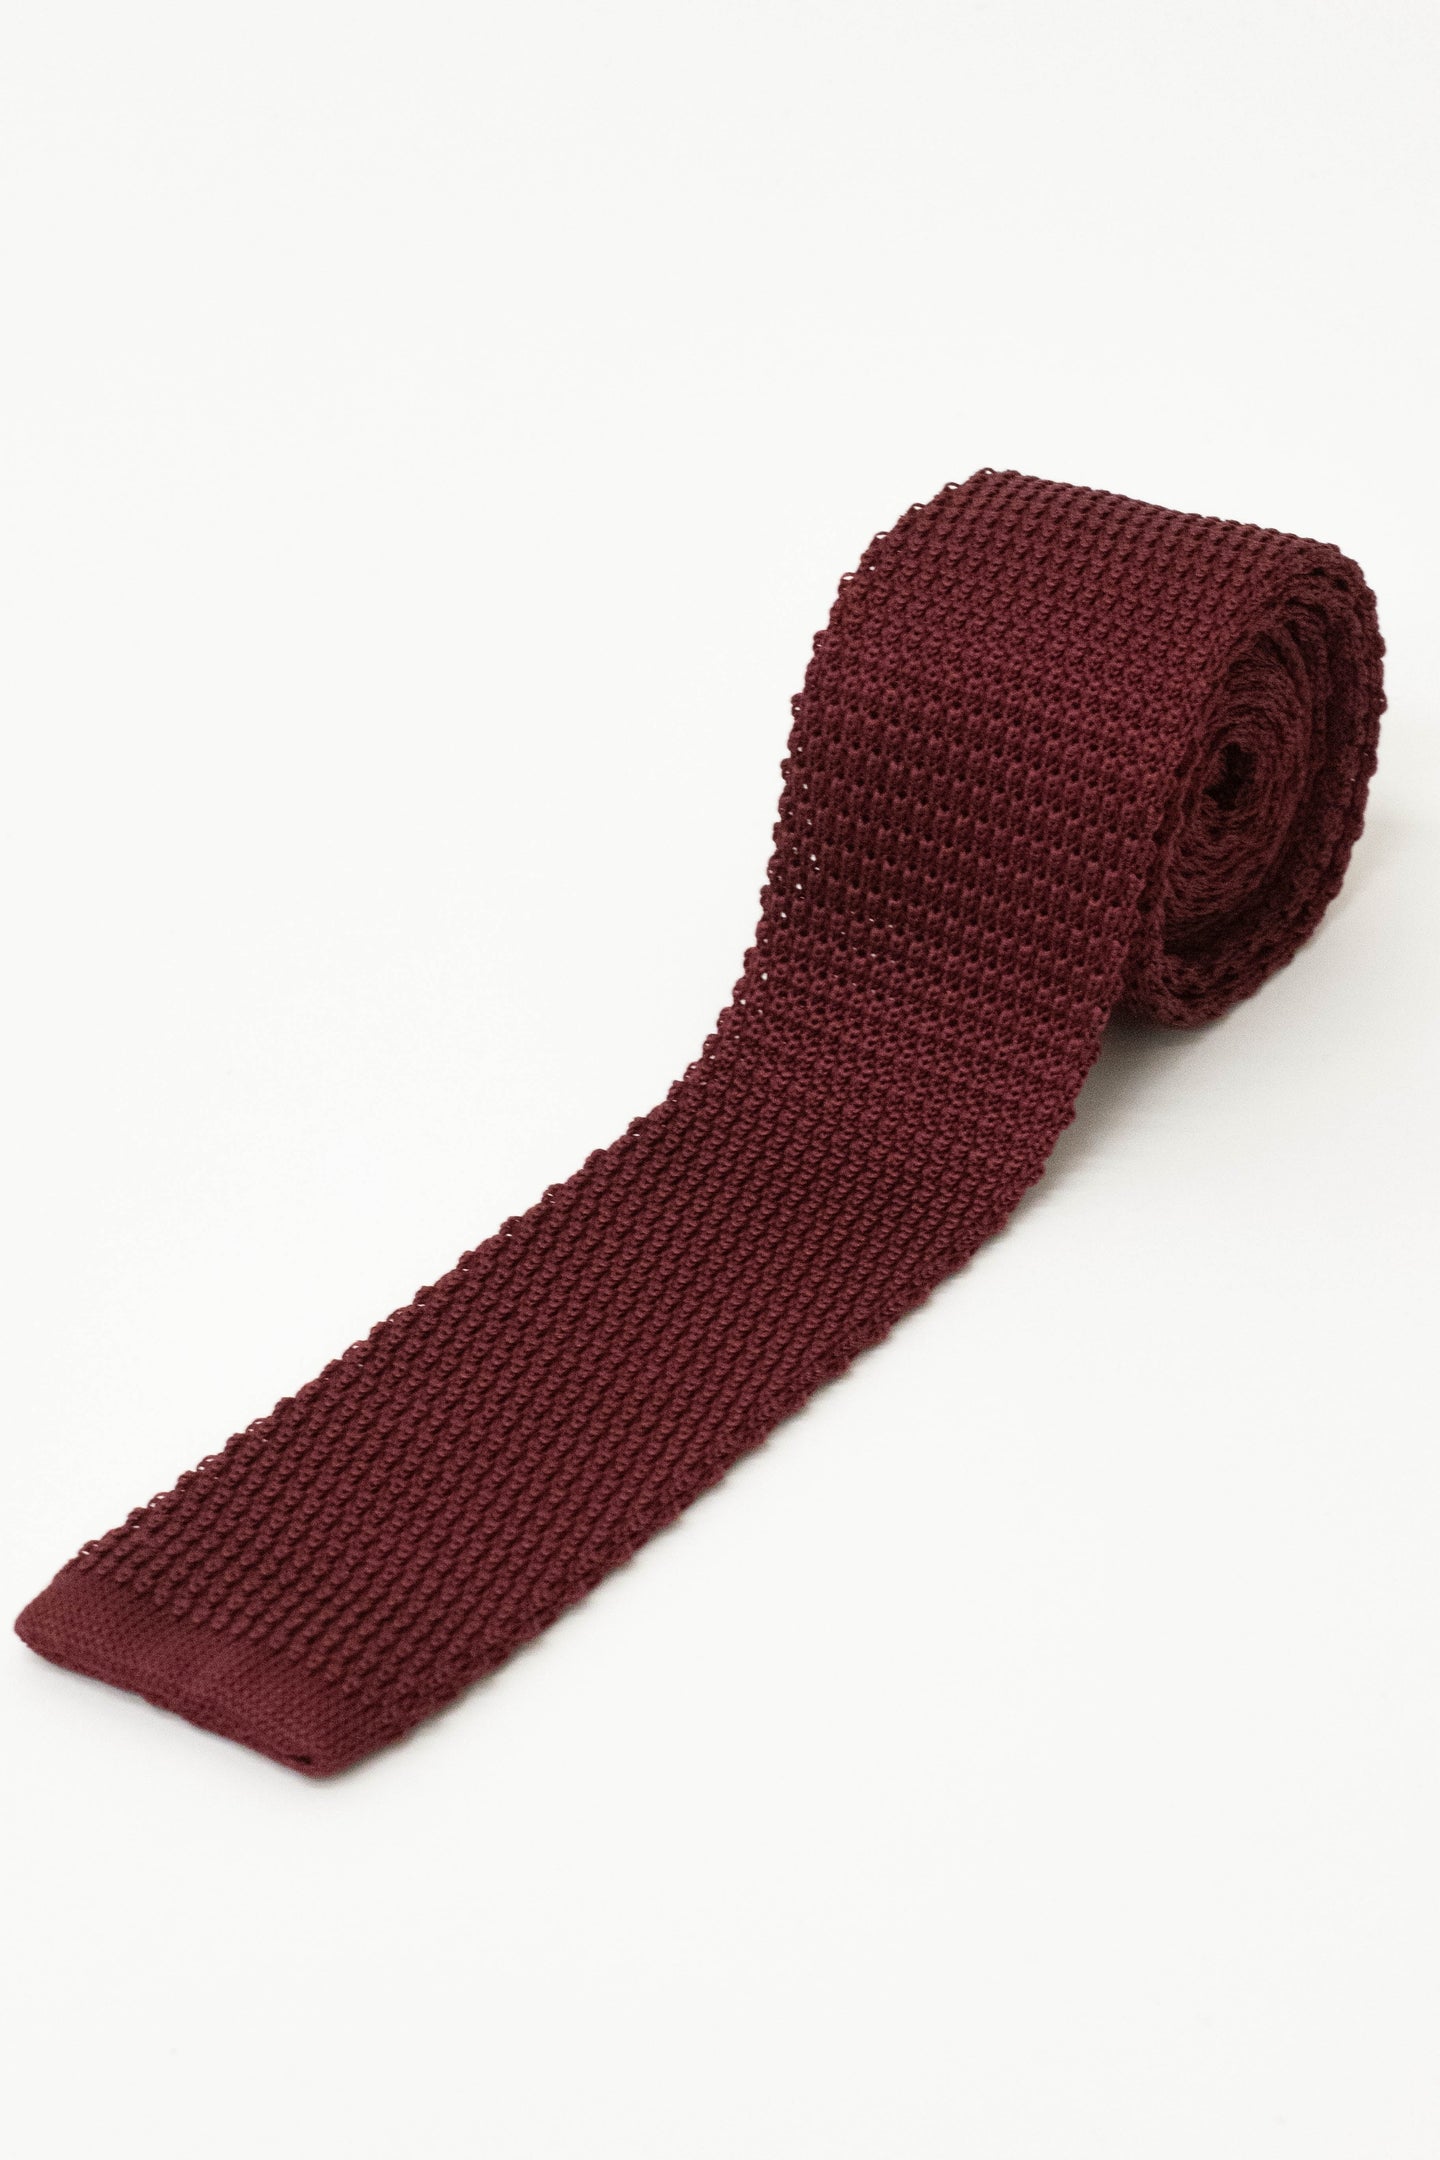 Knightsbridge Neckwear Plain Burgundy Silk Knitted Tie